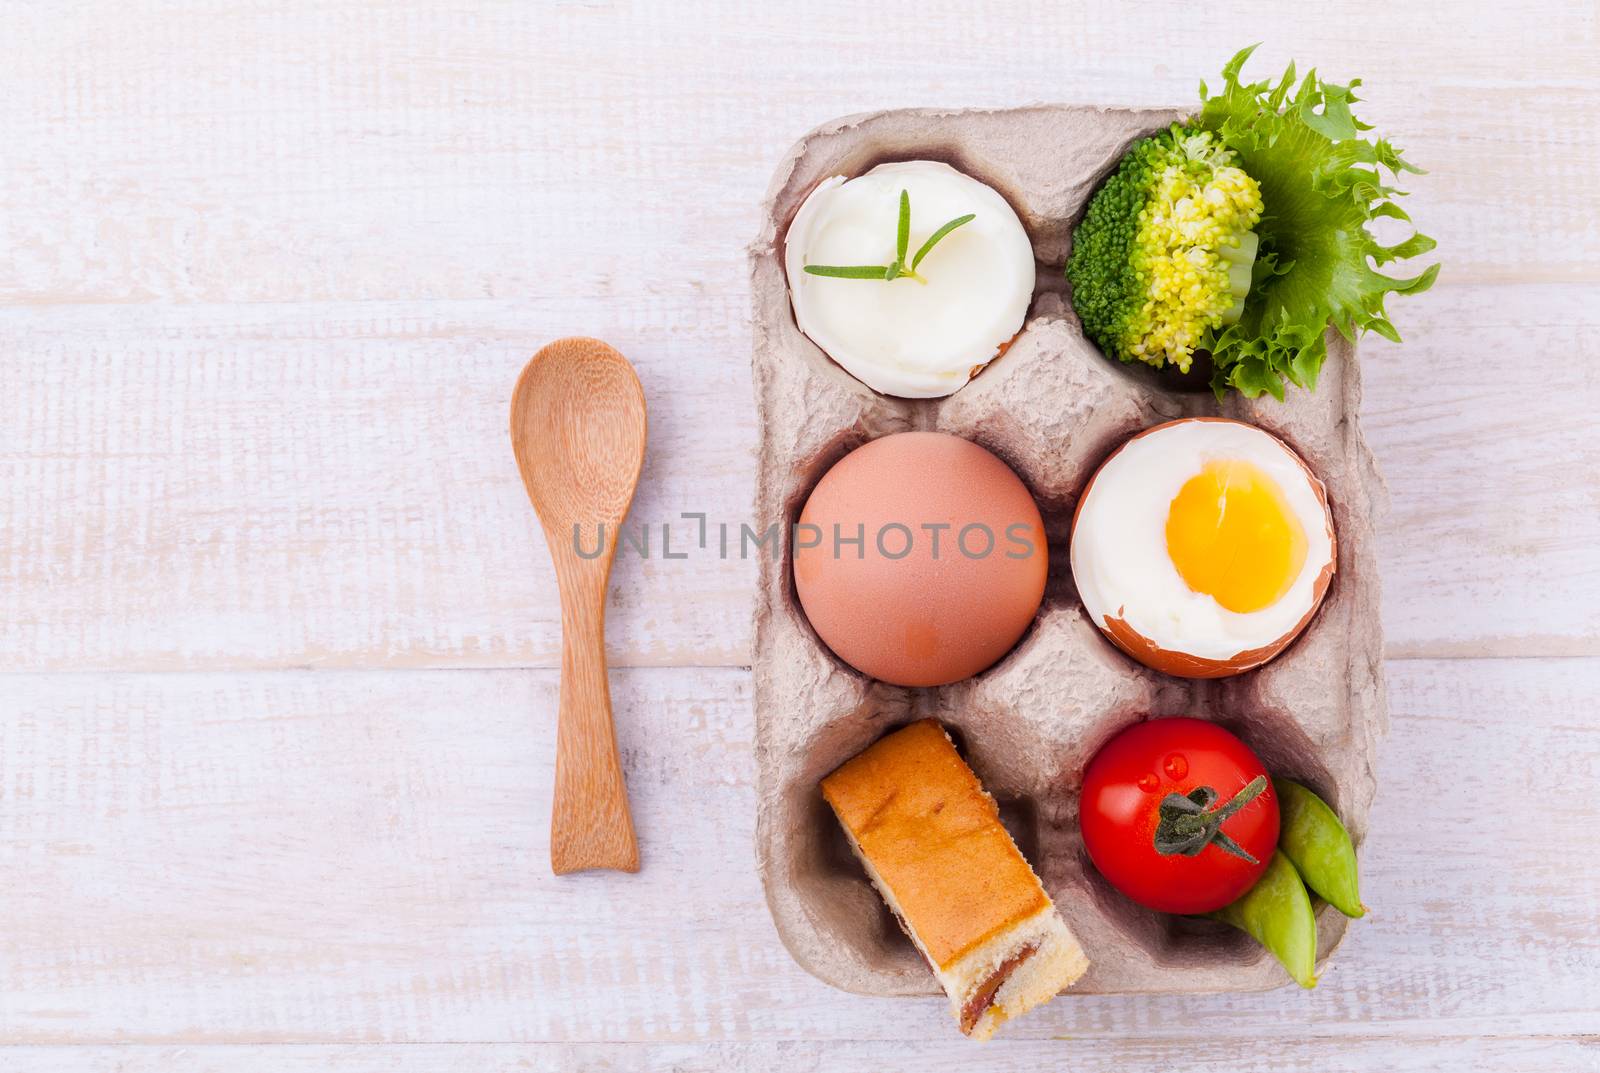 Boiled eggs for breakfast on wooden table.